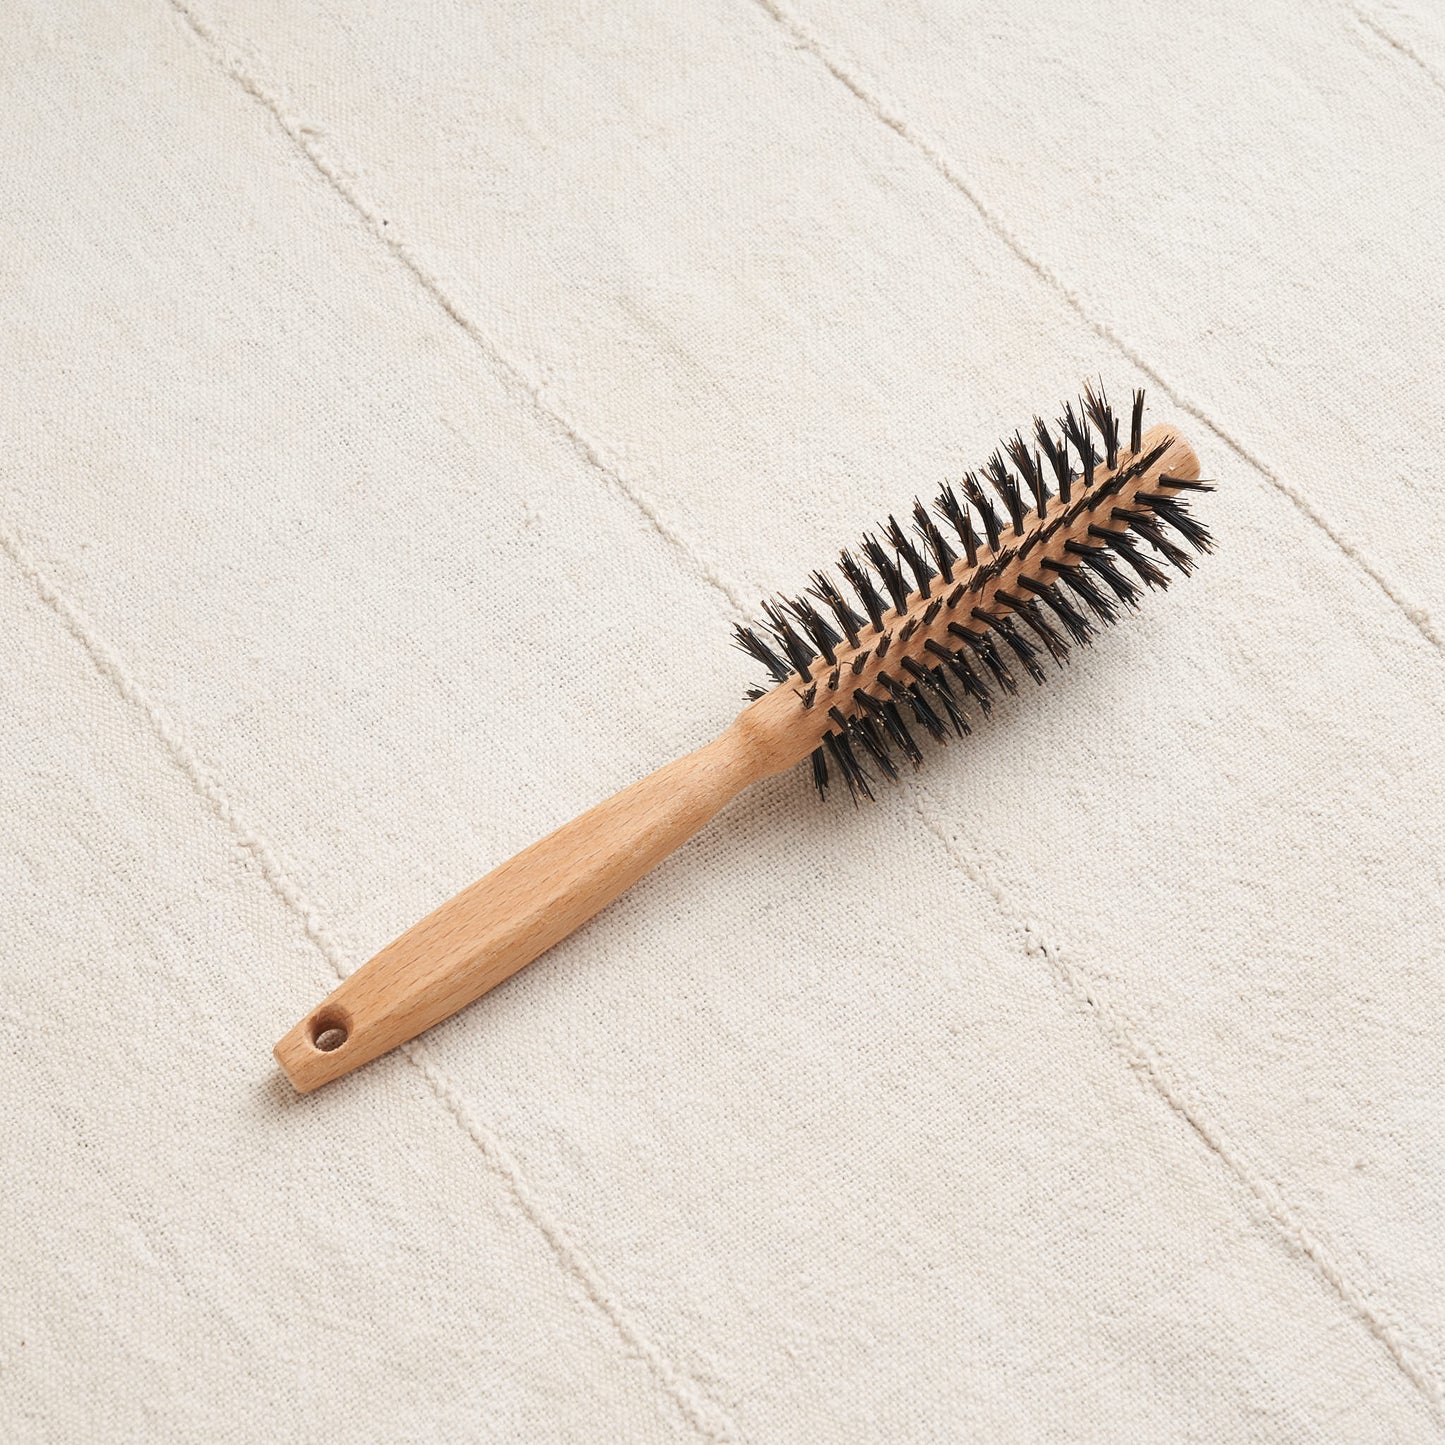 Boar Bristle Hairbrush, Full Round